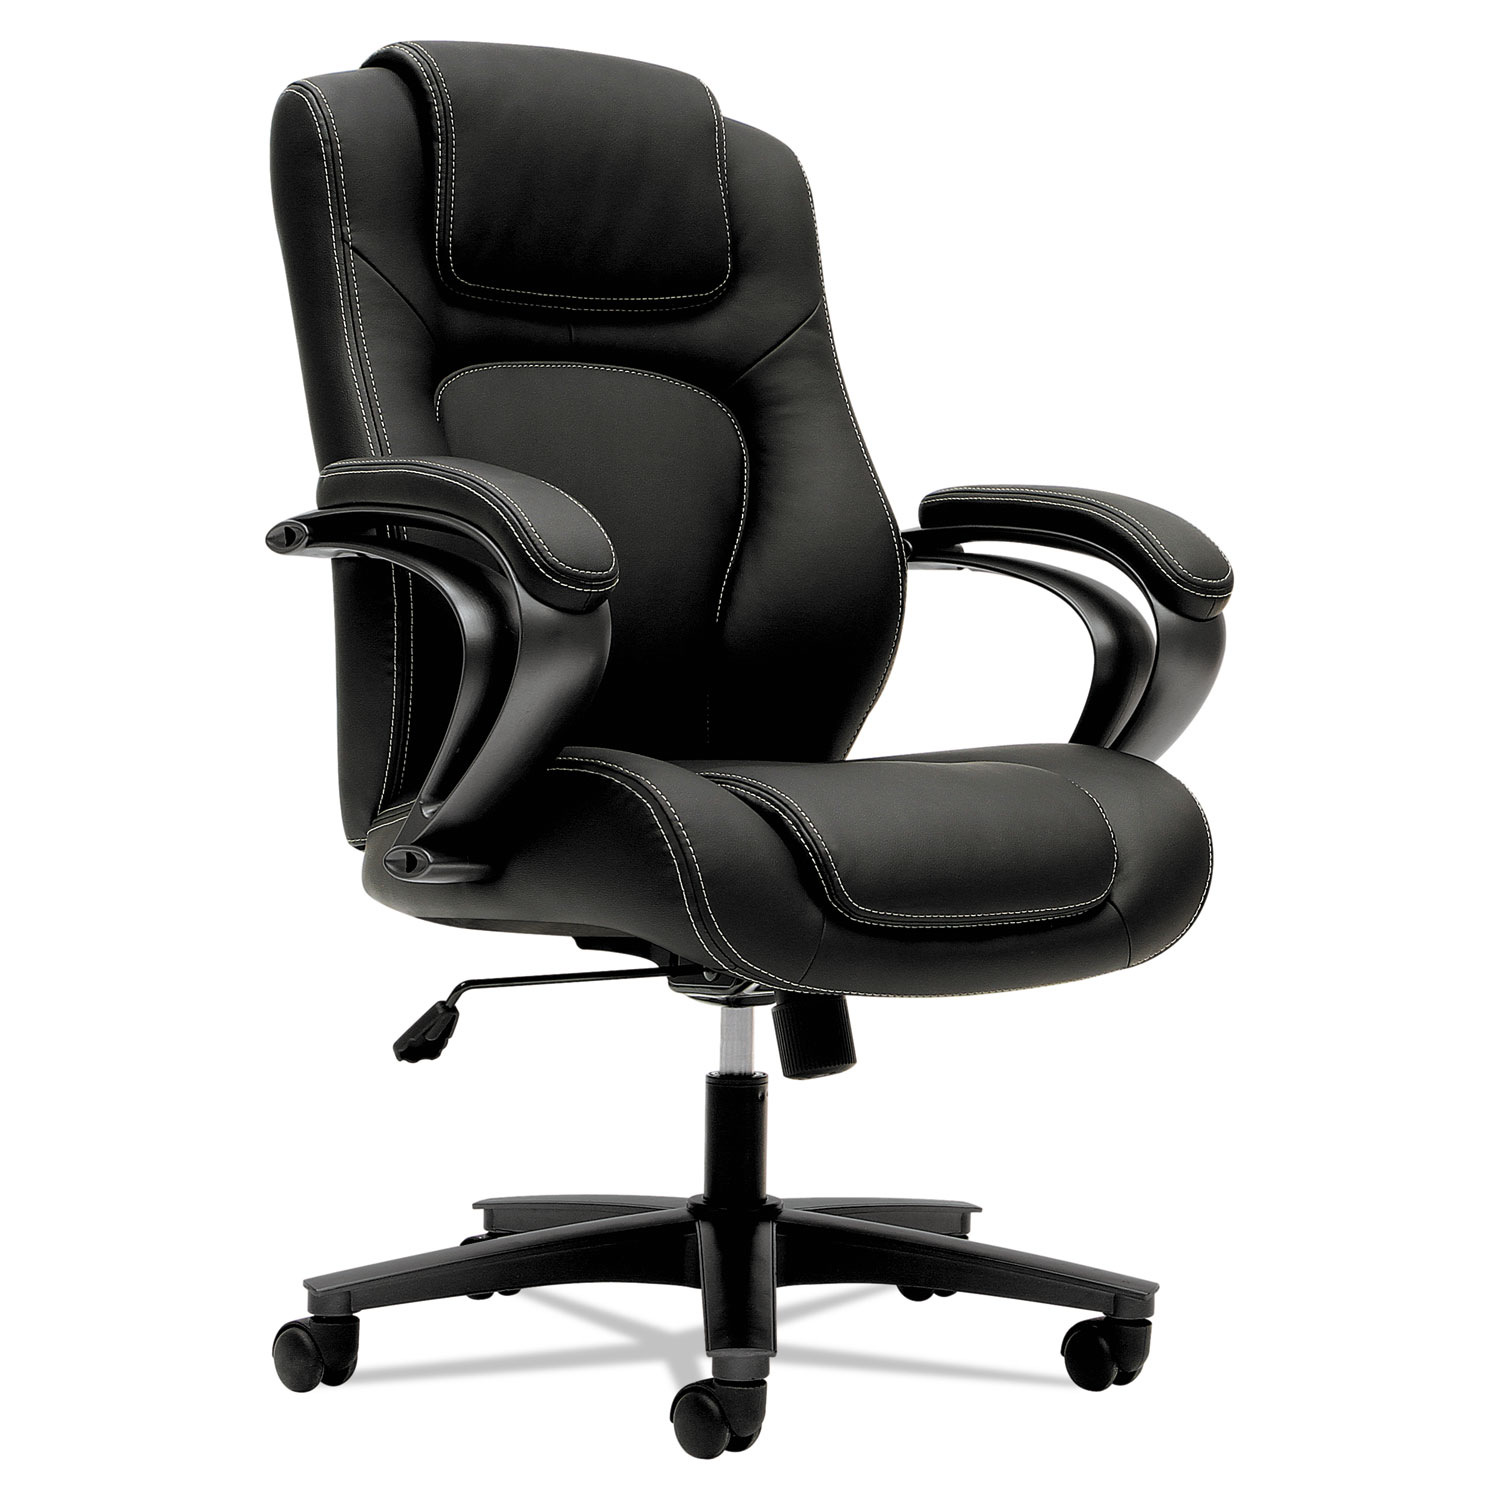 VL402 Series Executive High-Back Chair, Black Vinyl